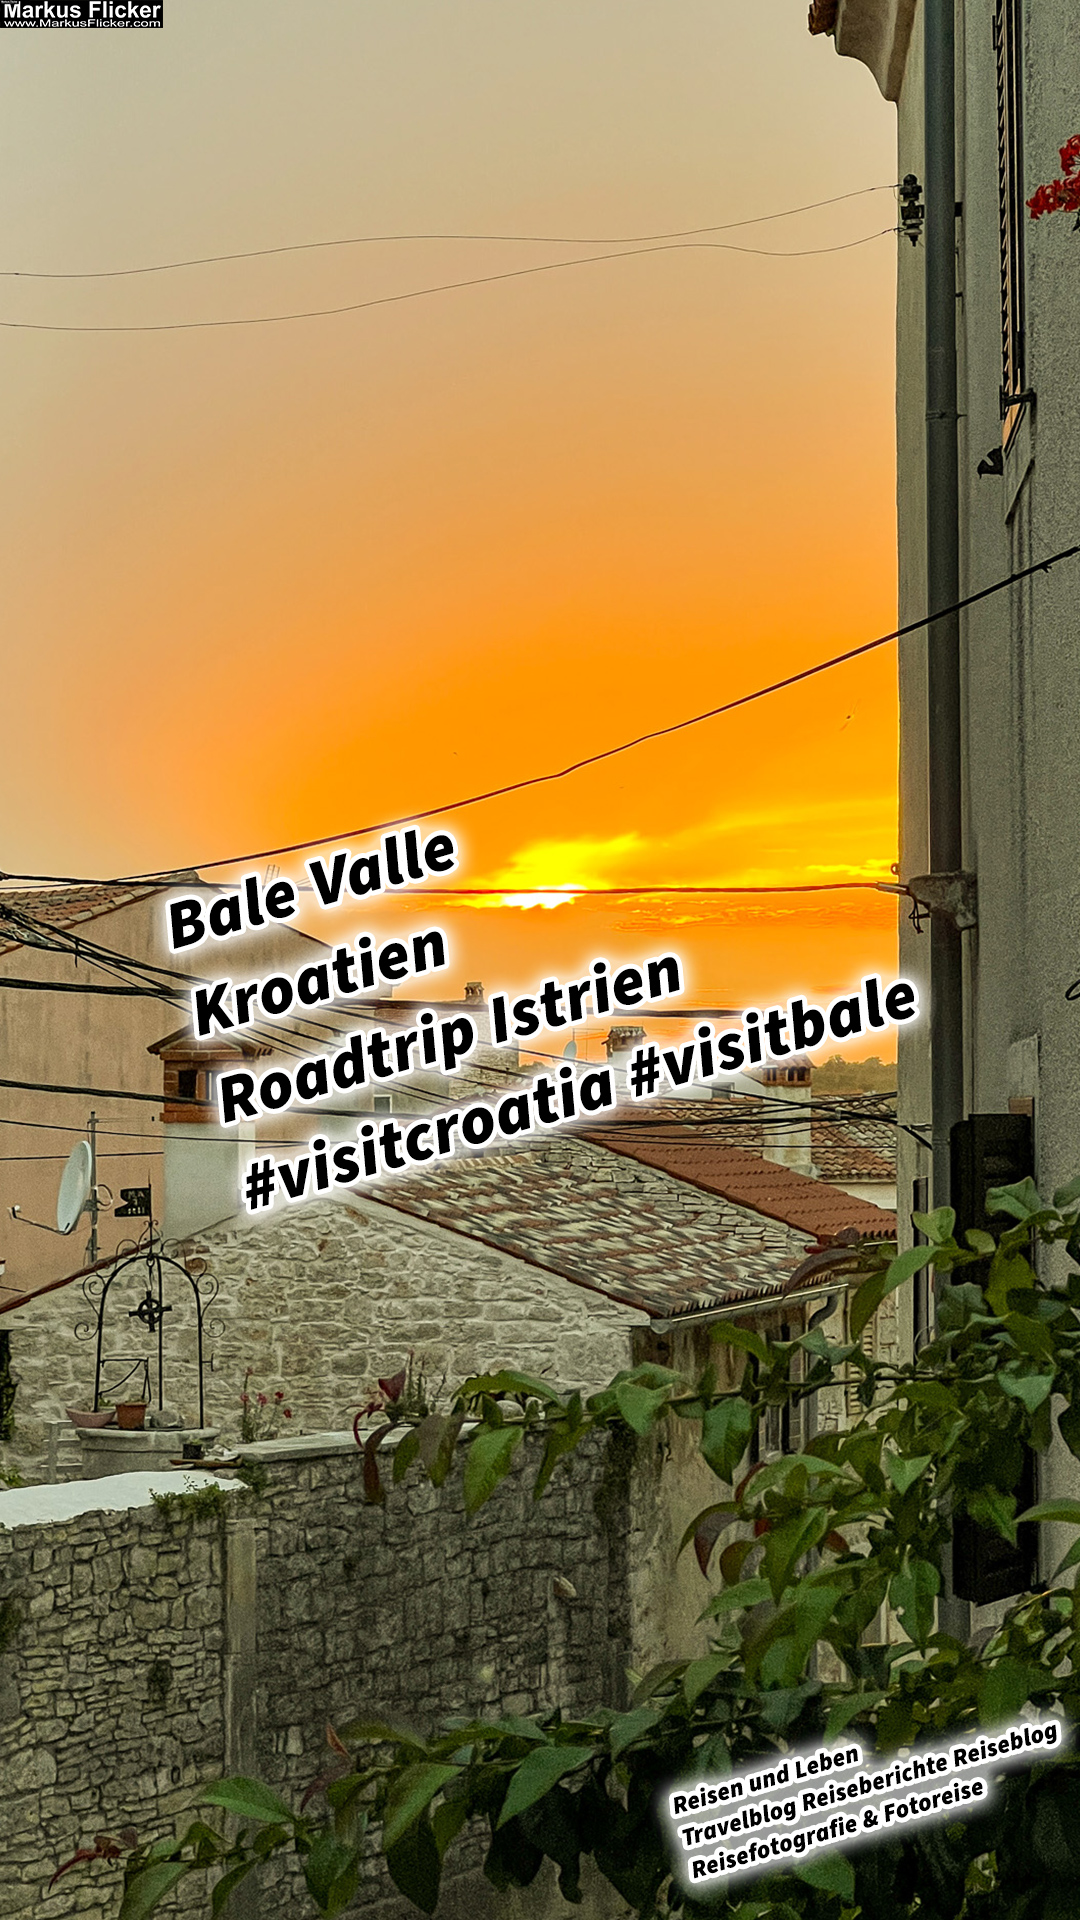 Bale Valle Kroatien Roadtrip Istrien #visitcroatia #visitbale